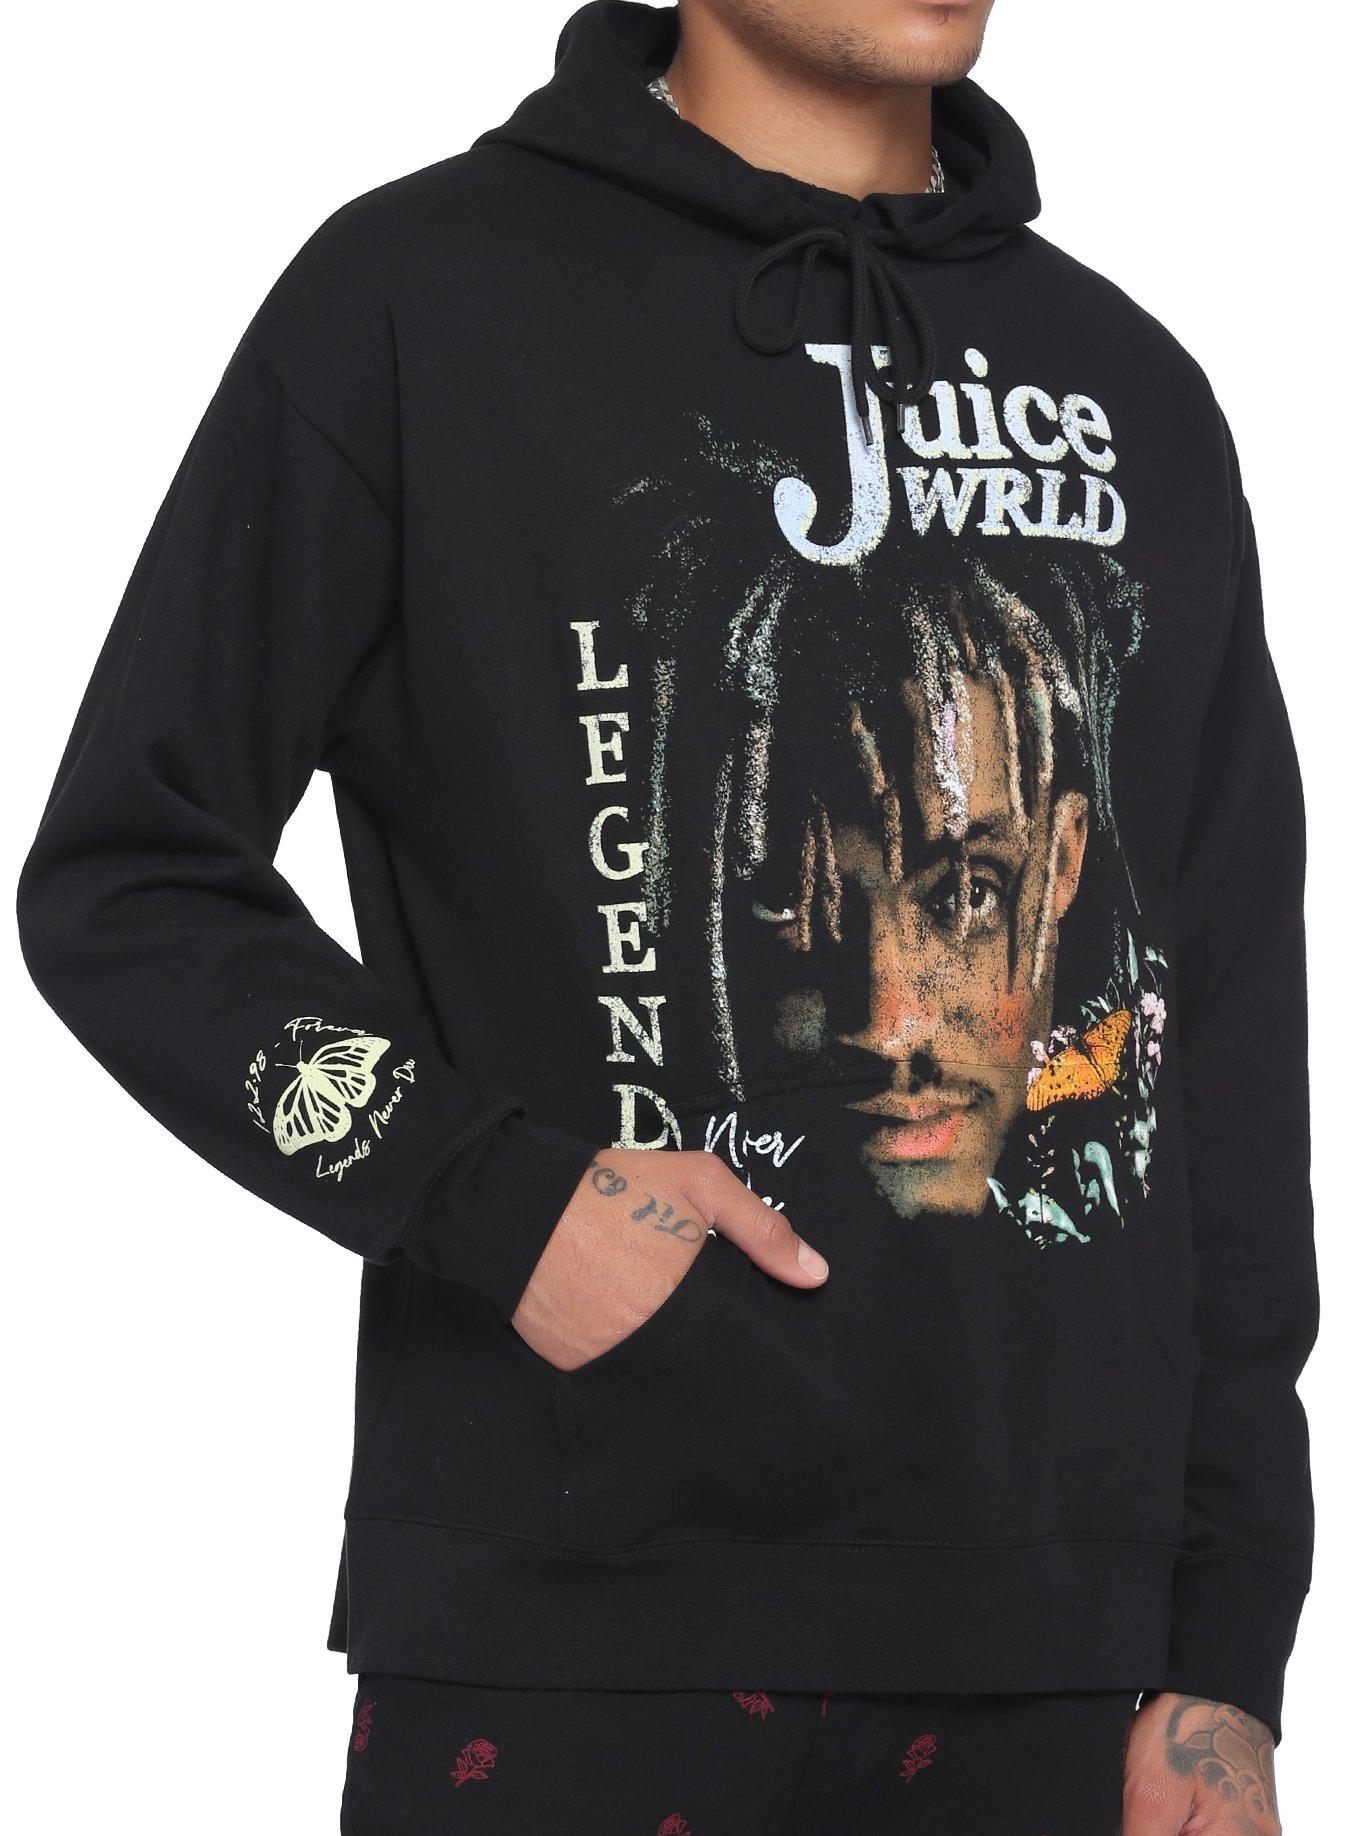 Juice WRLD Legends Never Die Black Graphic Hoodie Sz S